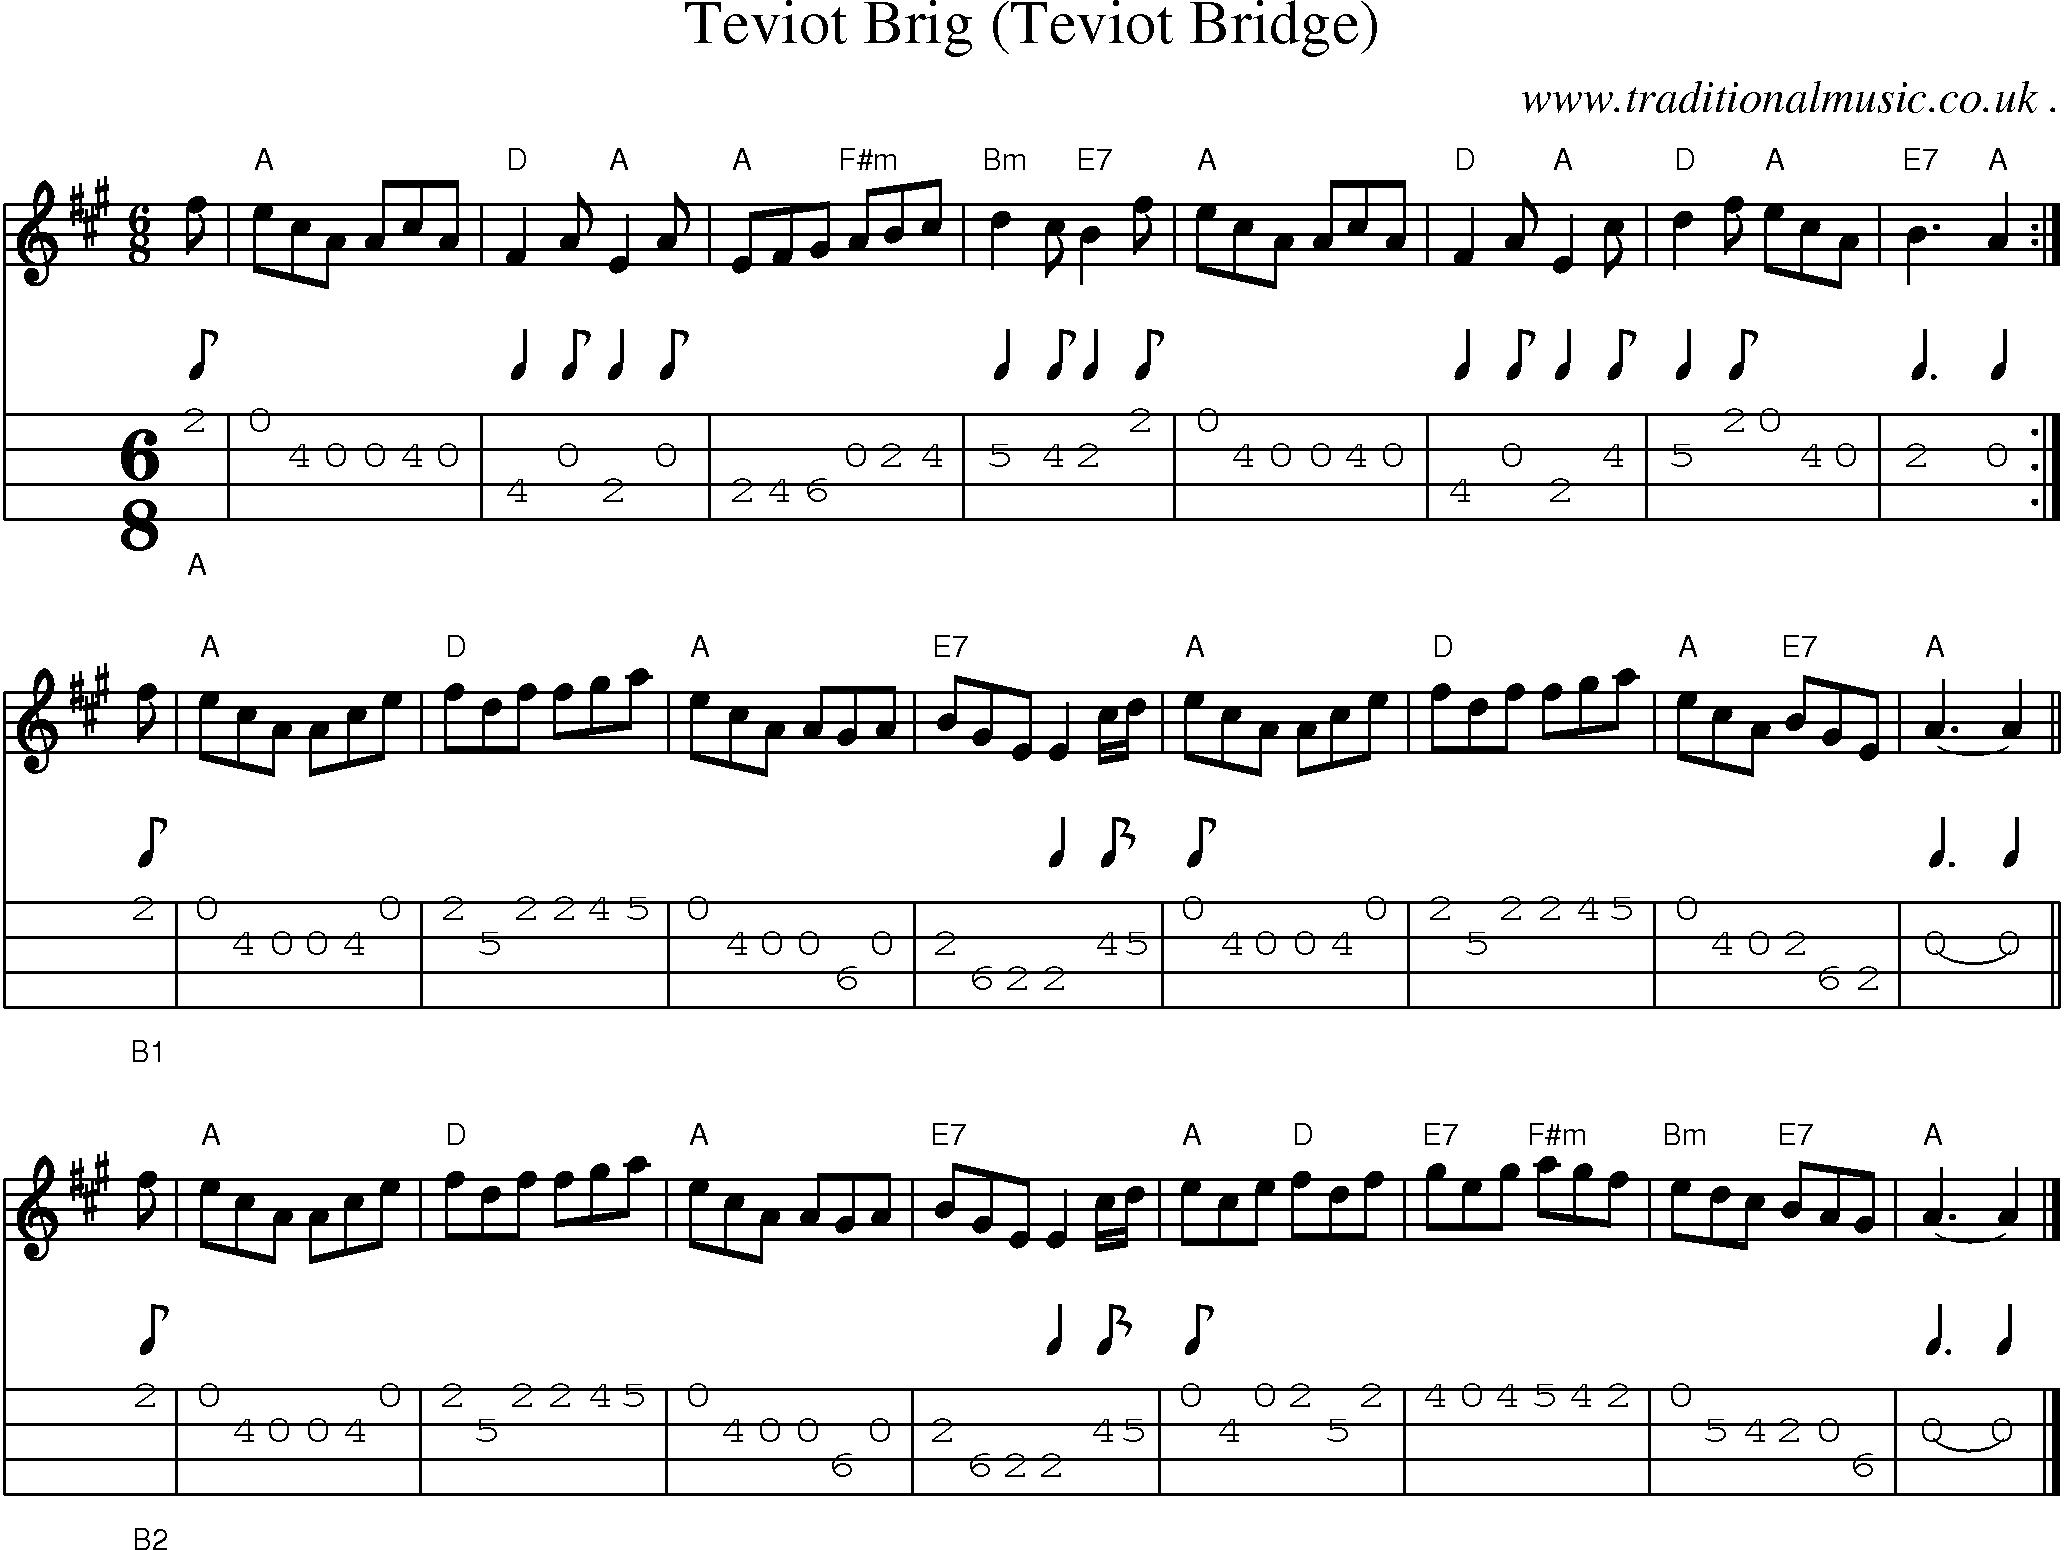 Sheet-music  score, Chords and Mandolin Tabs for Teviot Brig Teviot Bridge